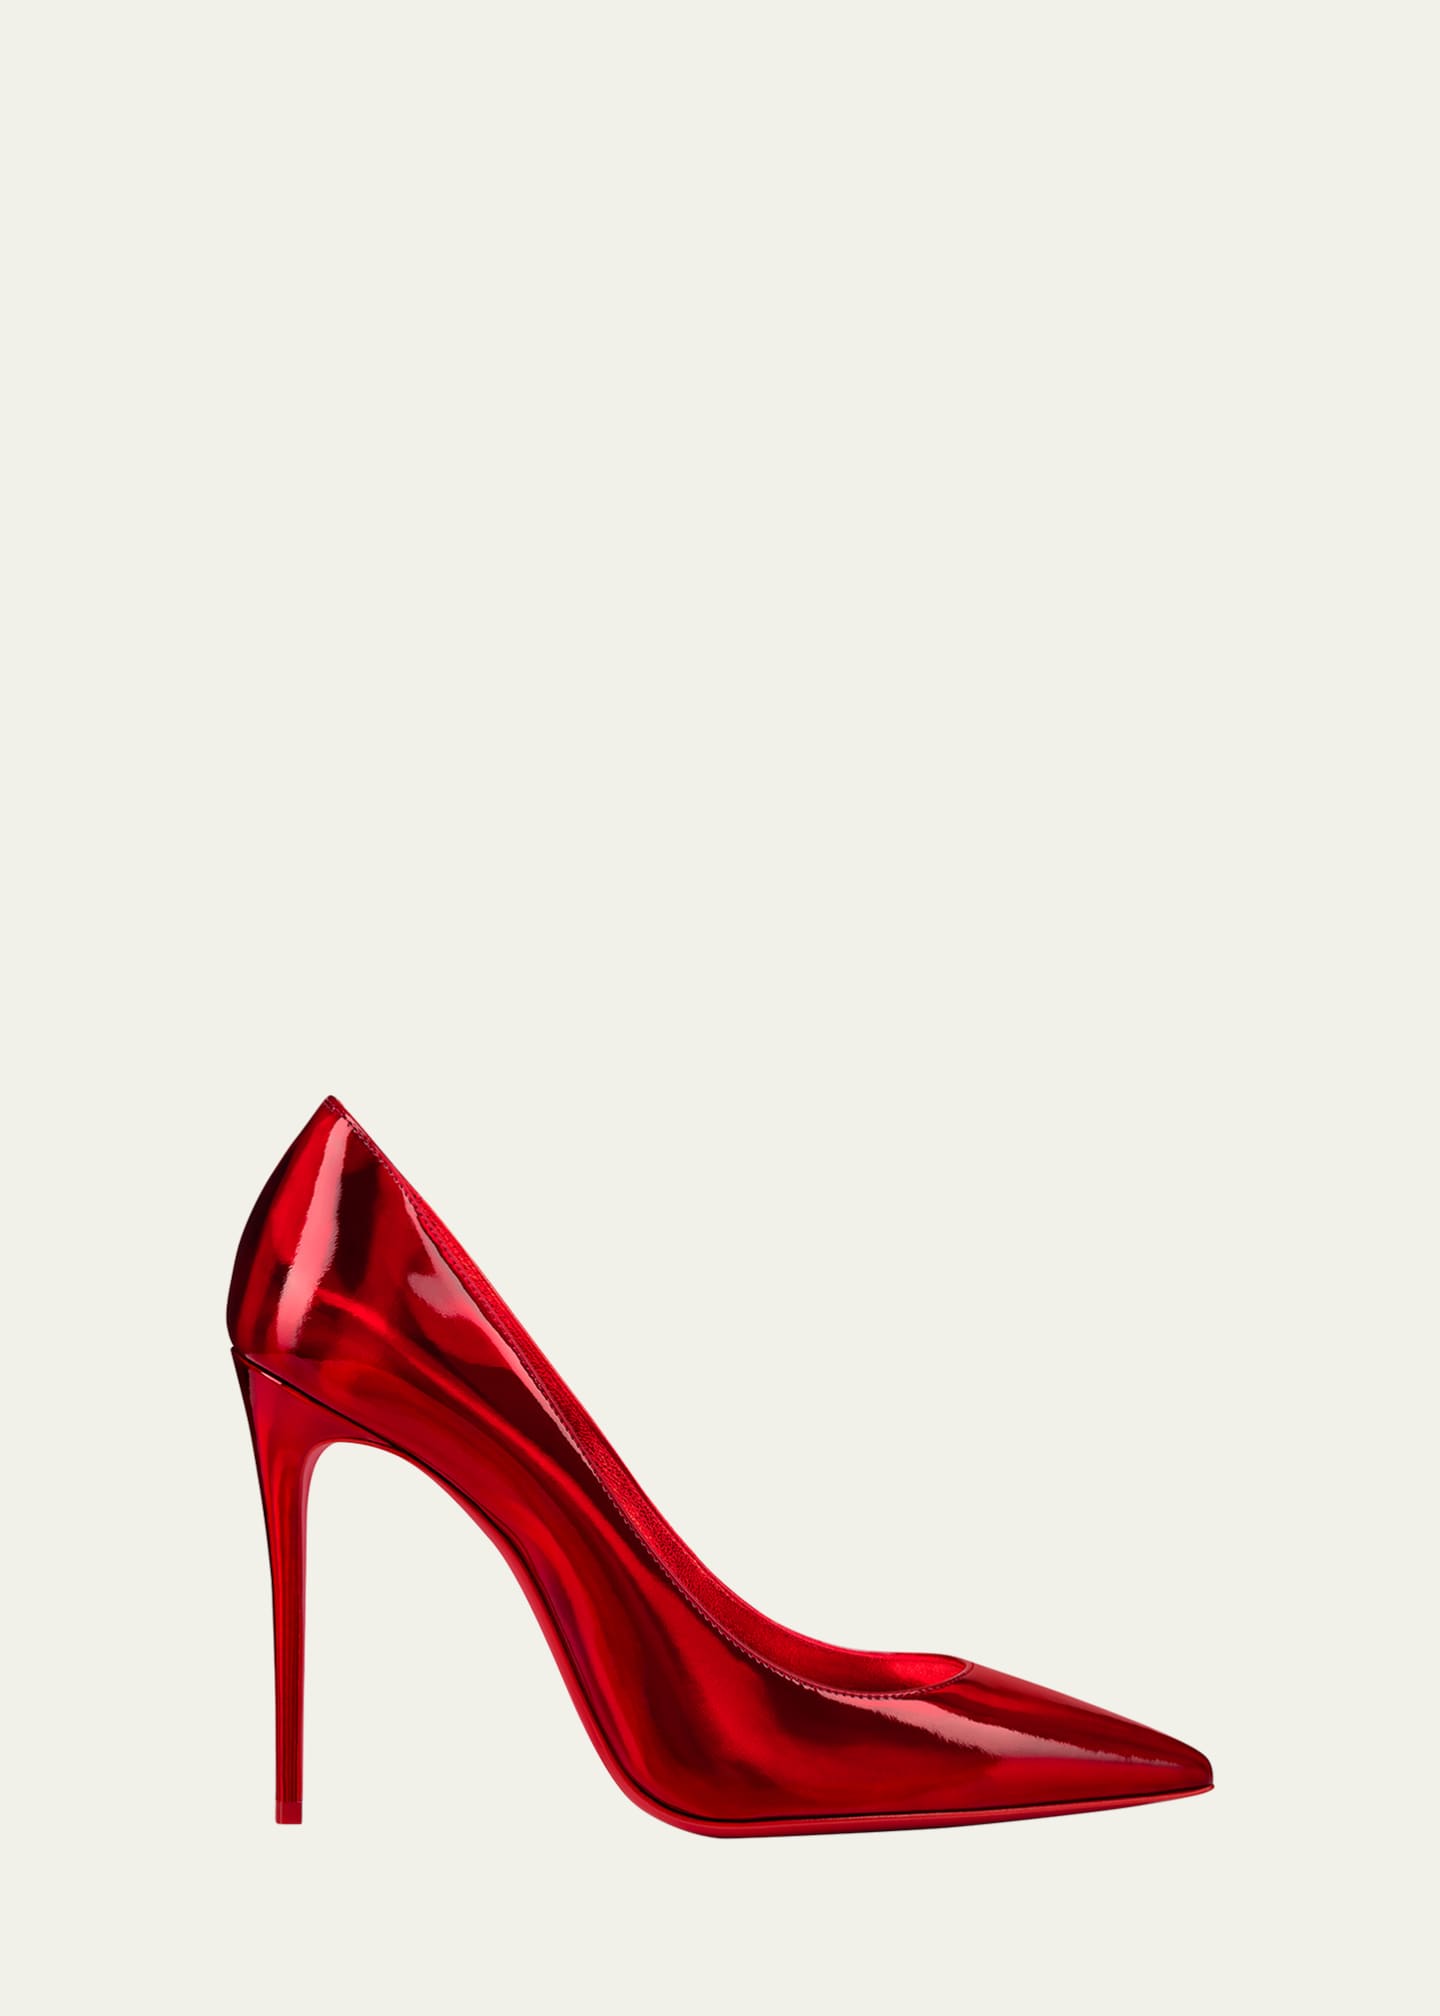 Red Sole Heels 